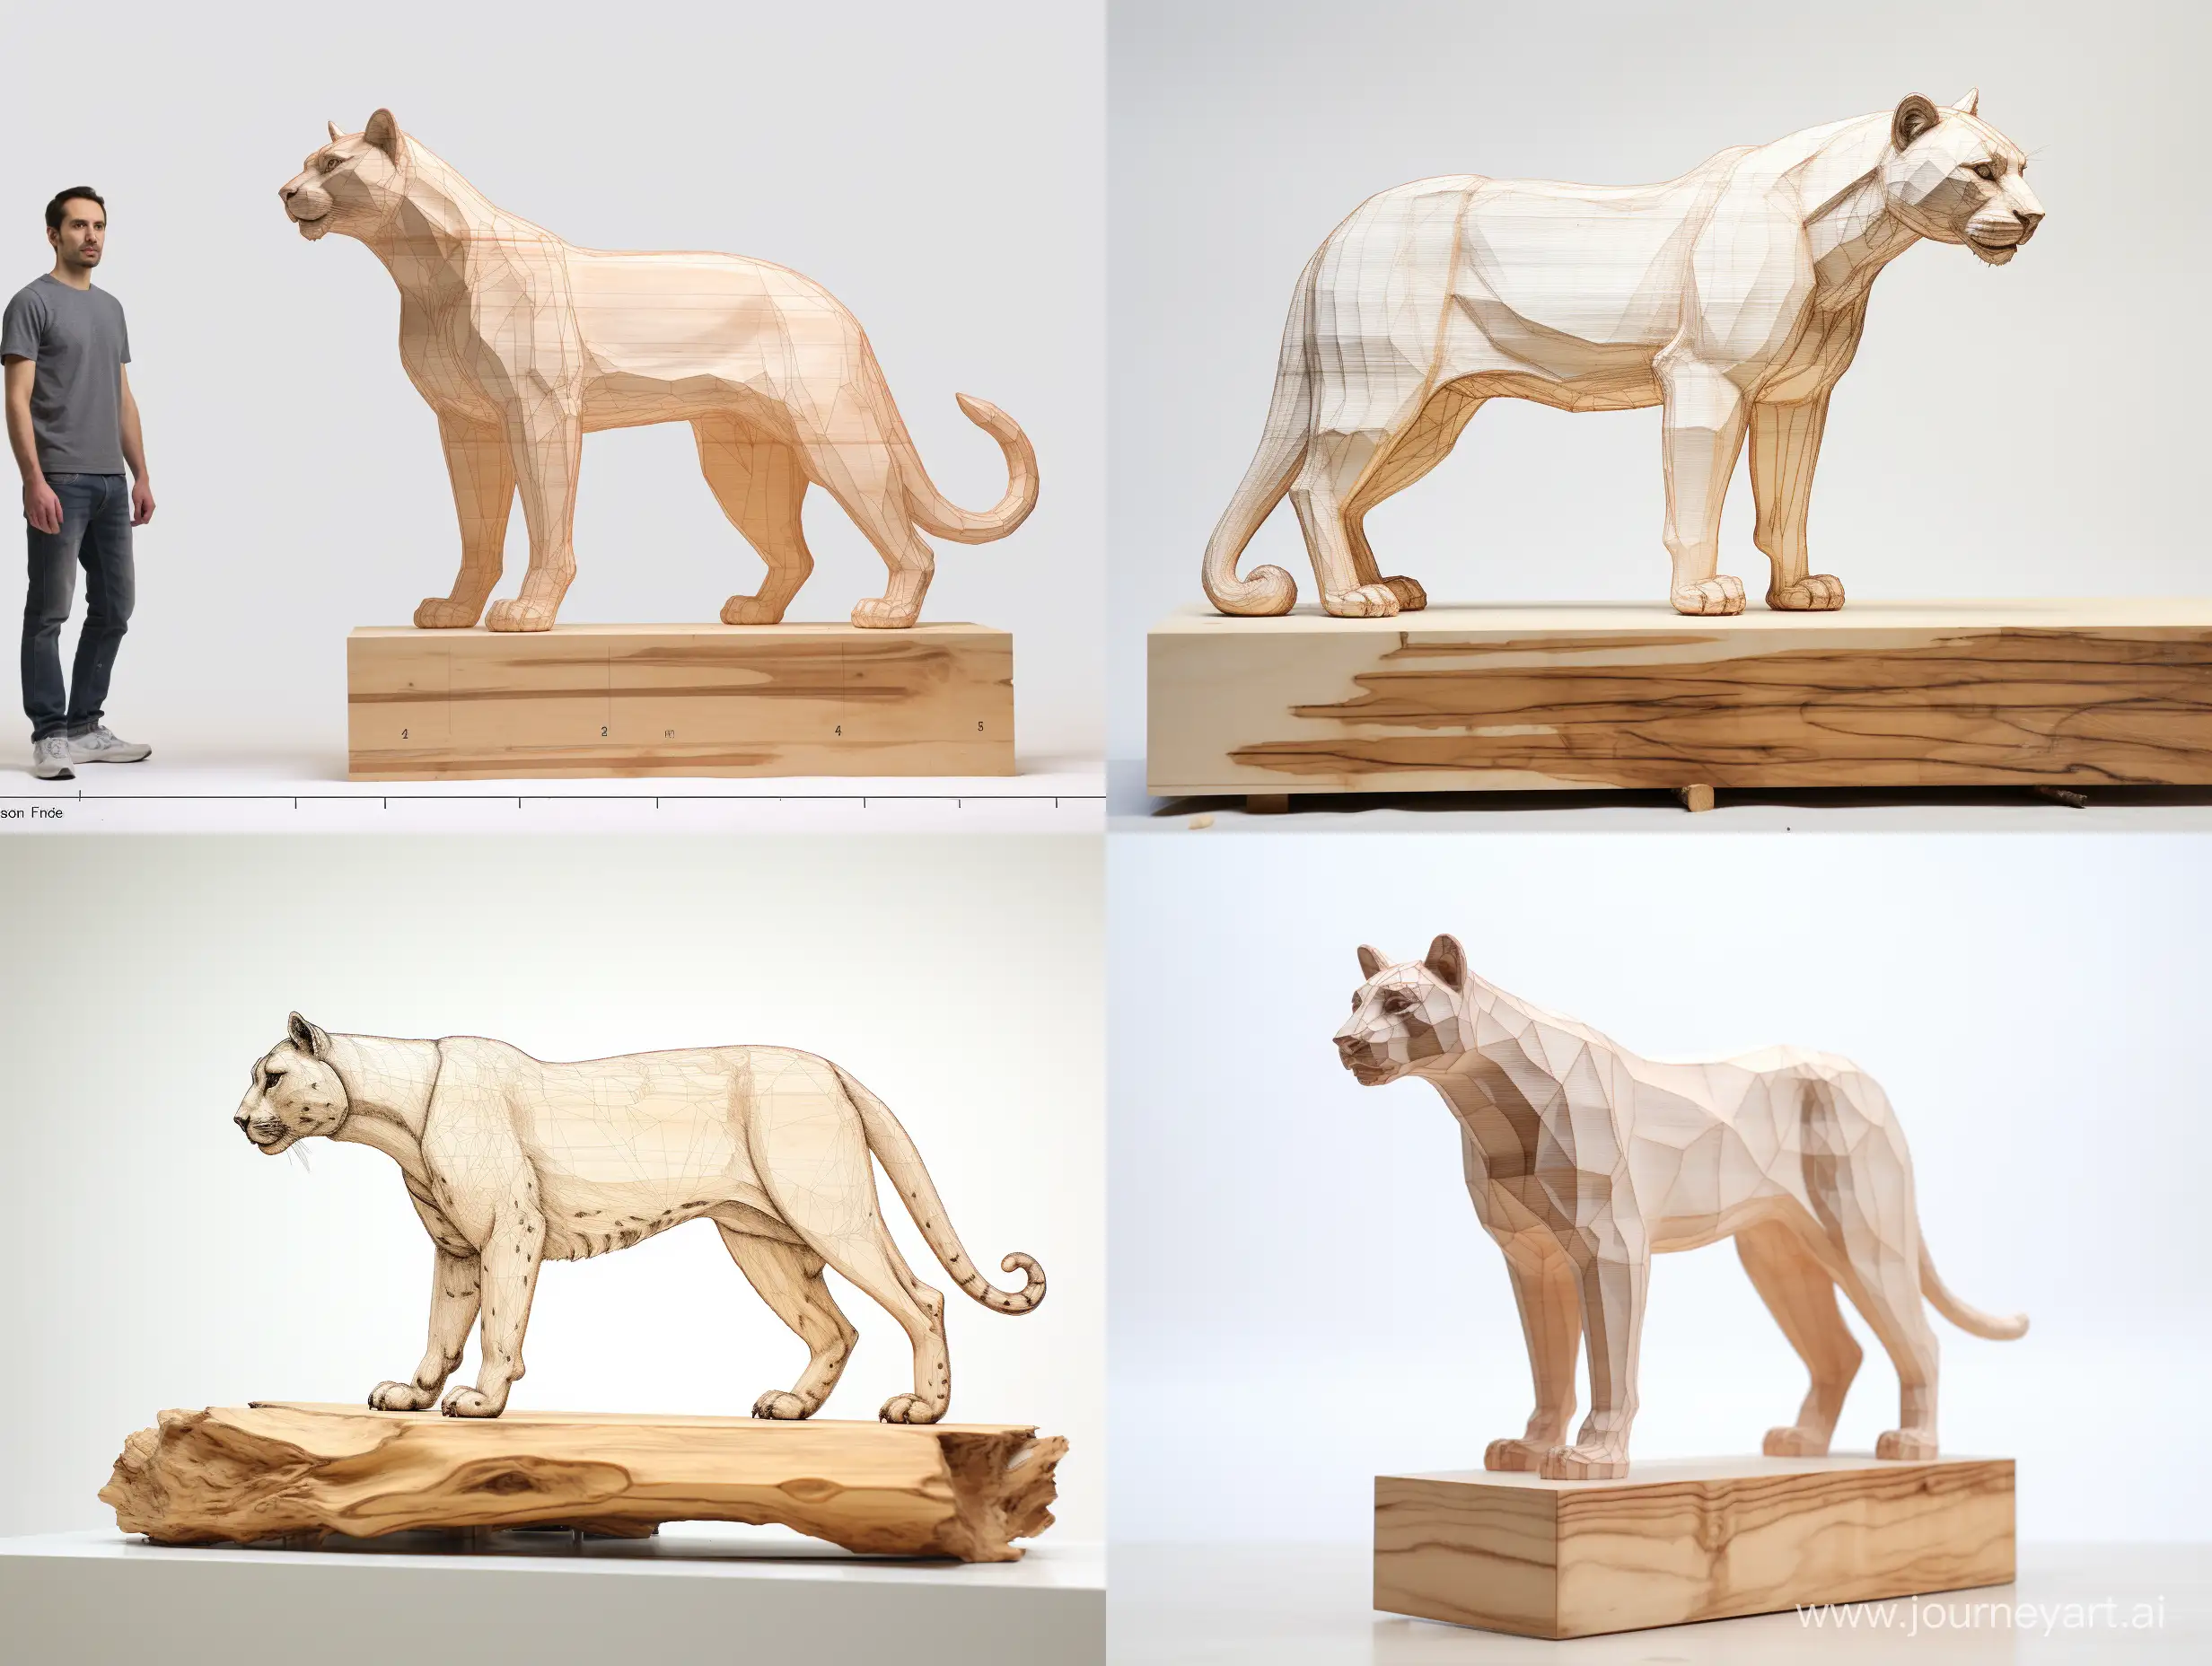 Majestic-Cougar-Wooden-Sculpture-in-Battle-Stance-3D-Carving-Art